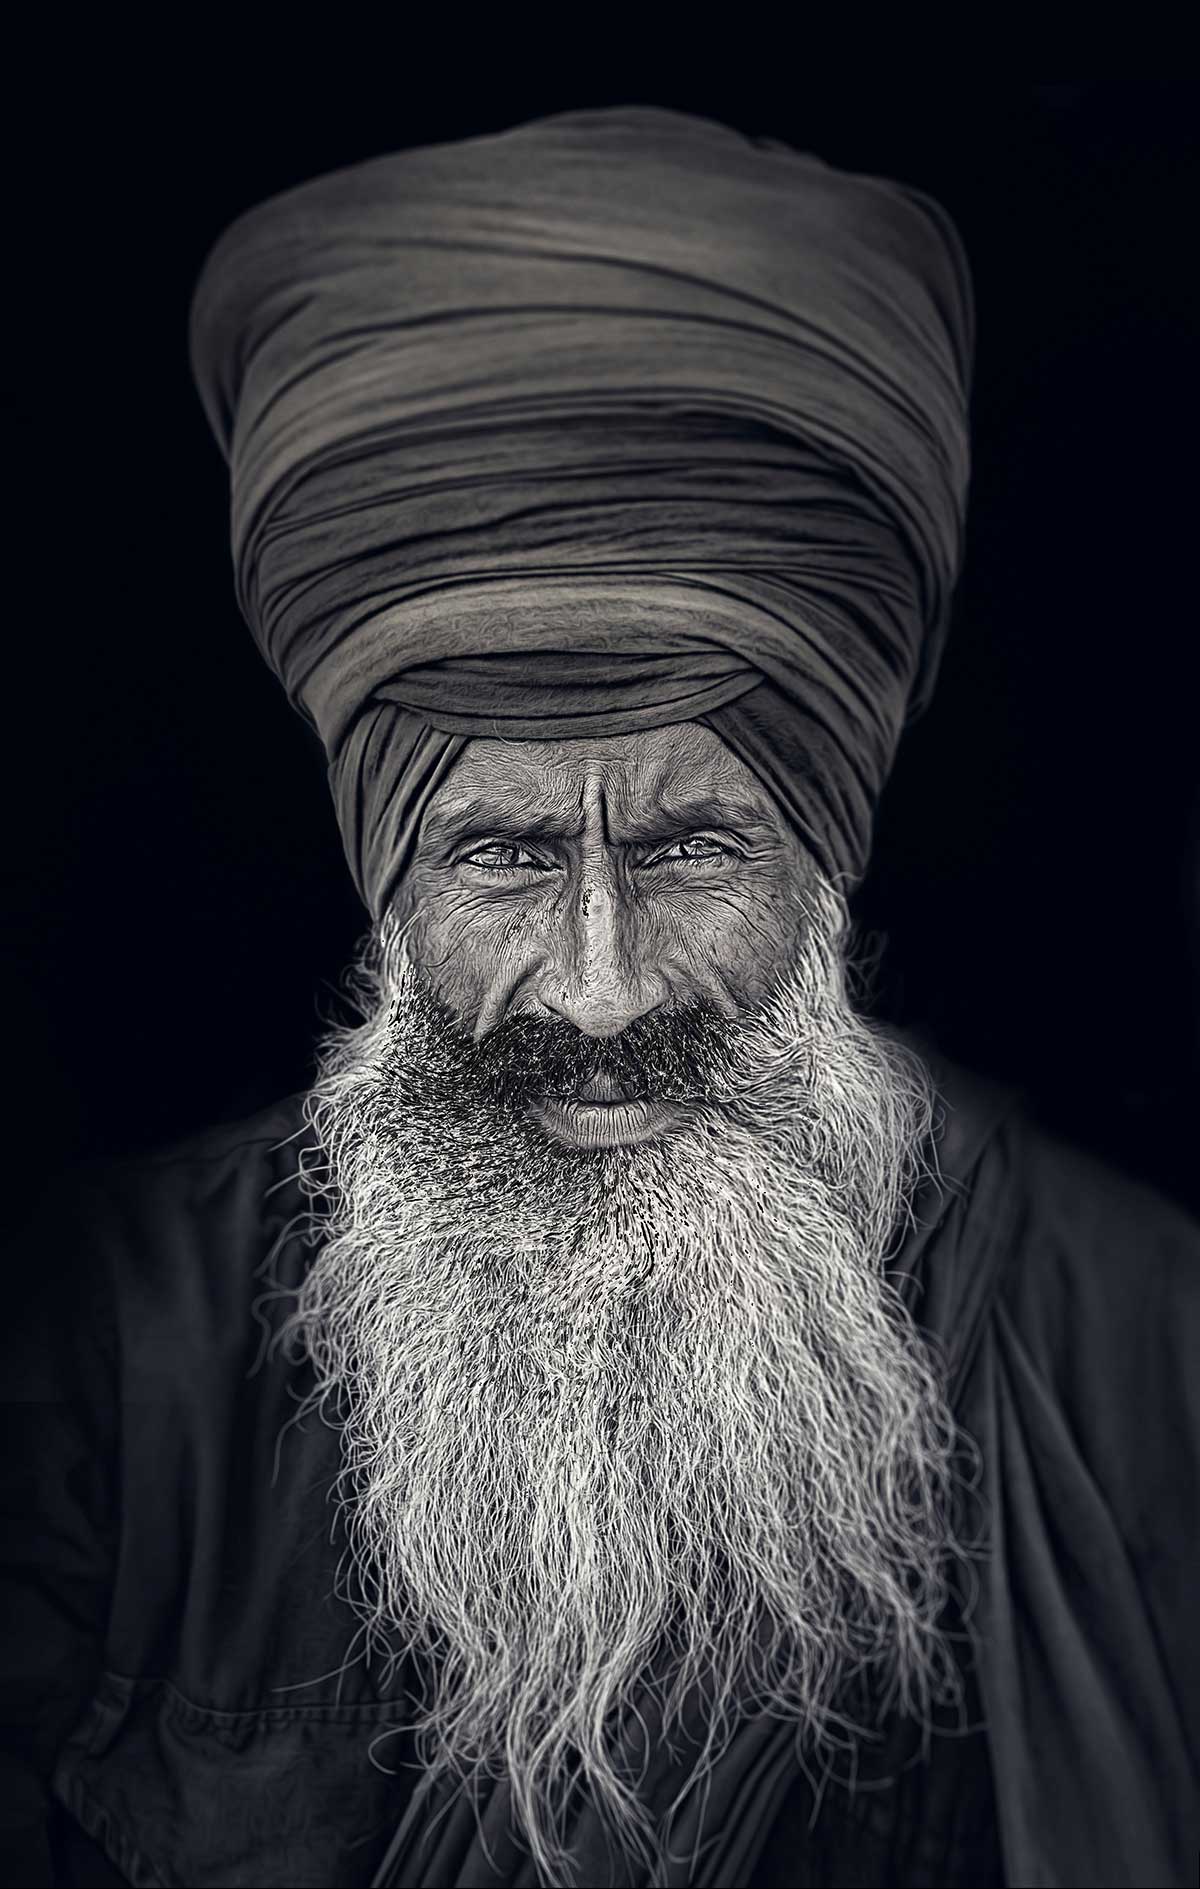 Portrait indian sikh man in turban with bushy beard. Amritsar, India. Close up